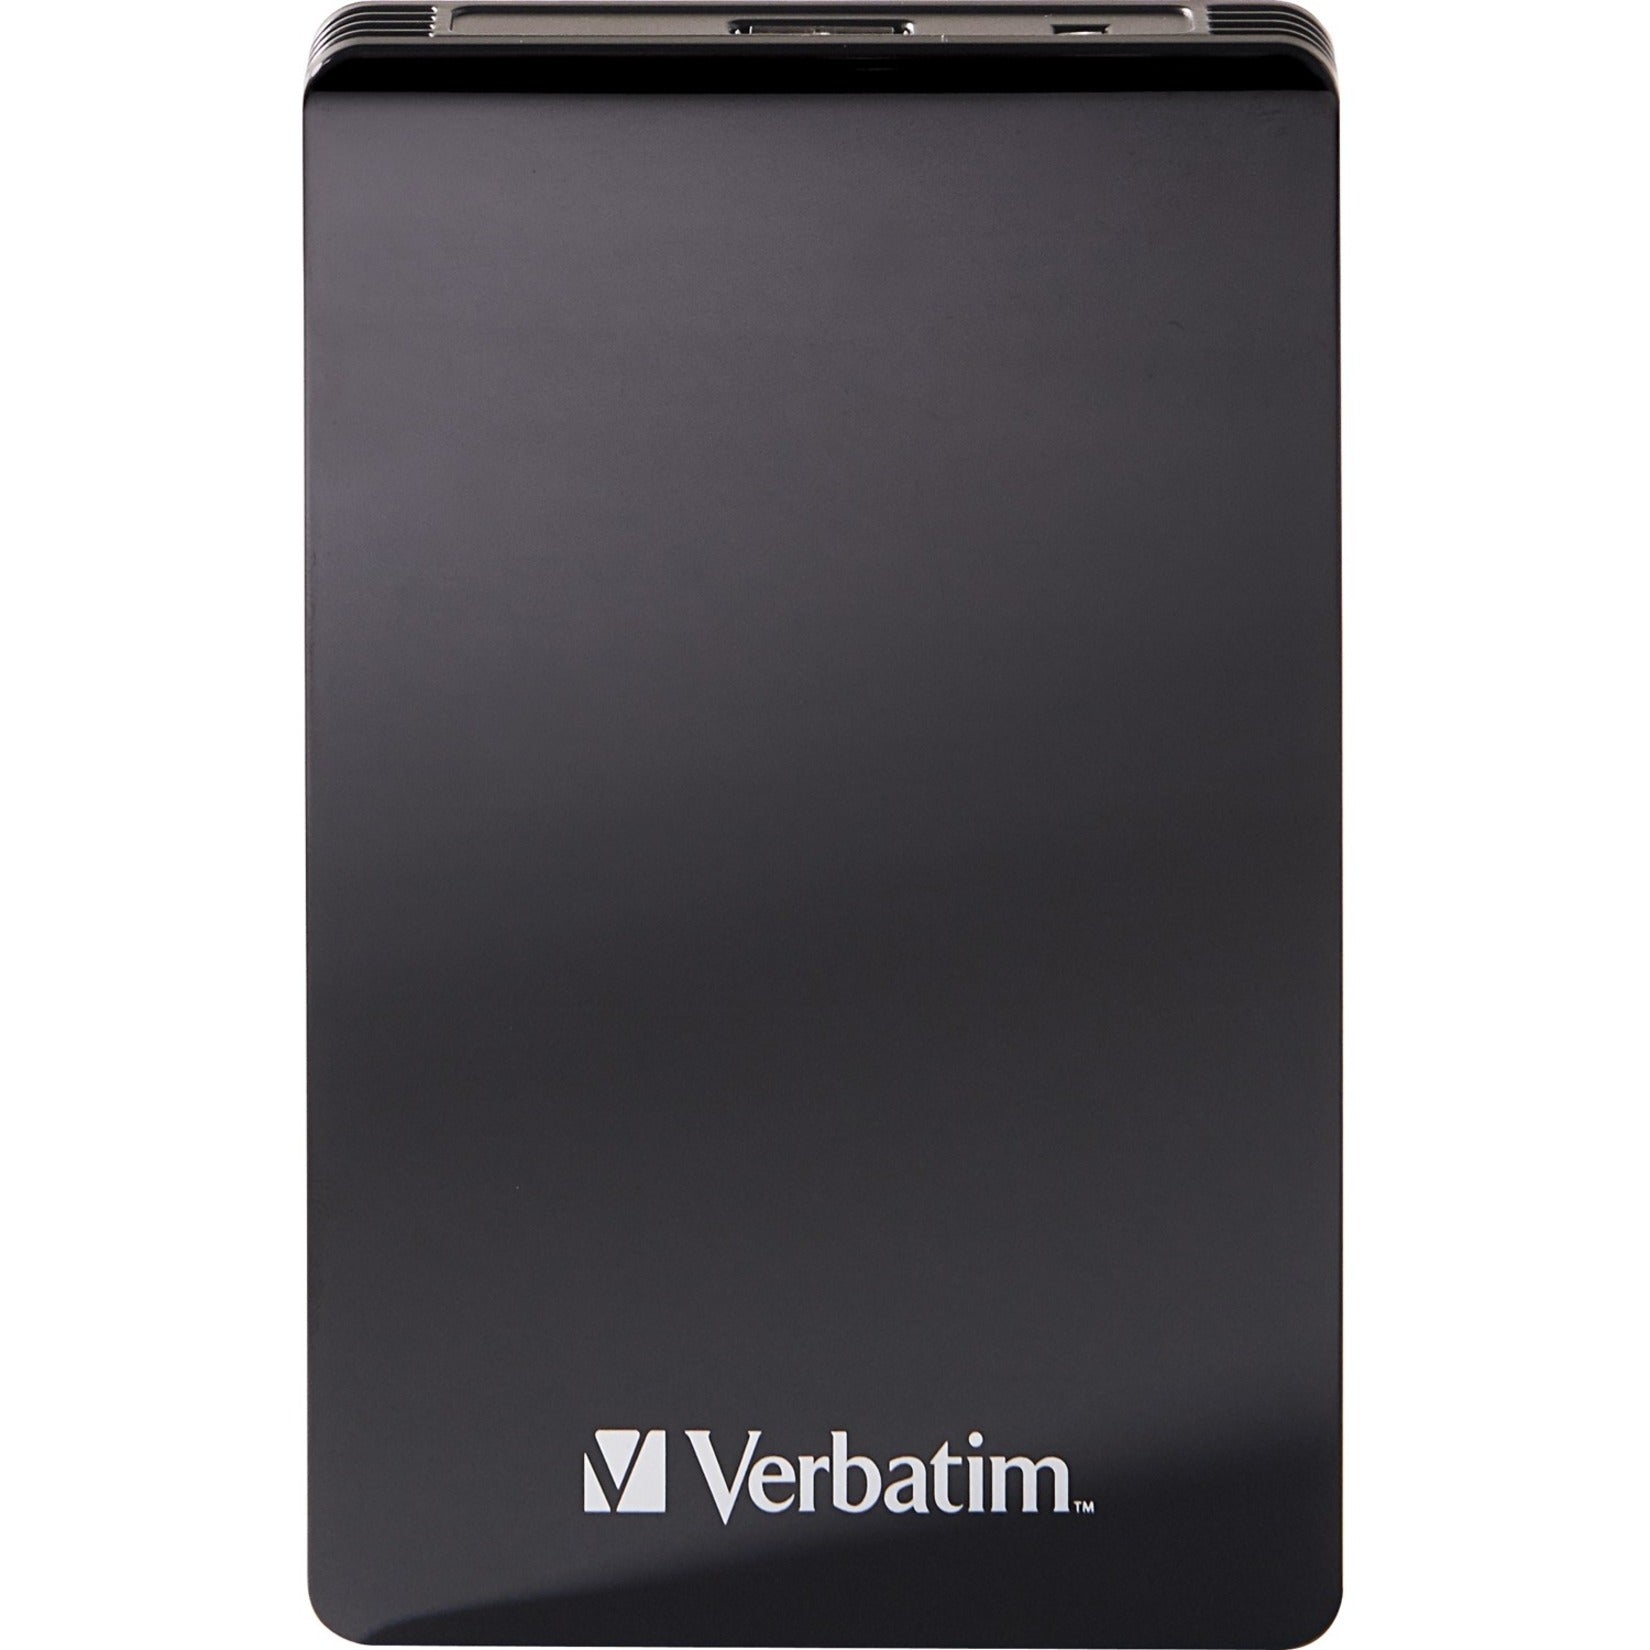 Verbatim 70382 Vx460 External SSD, USB 3.1 Gen 1 - Black, 256GB Storage